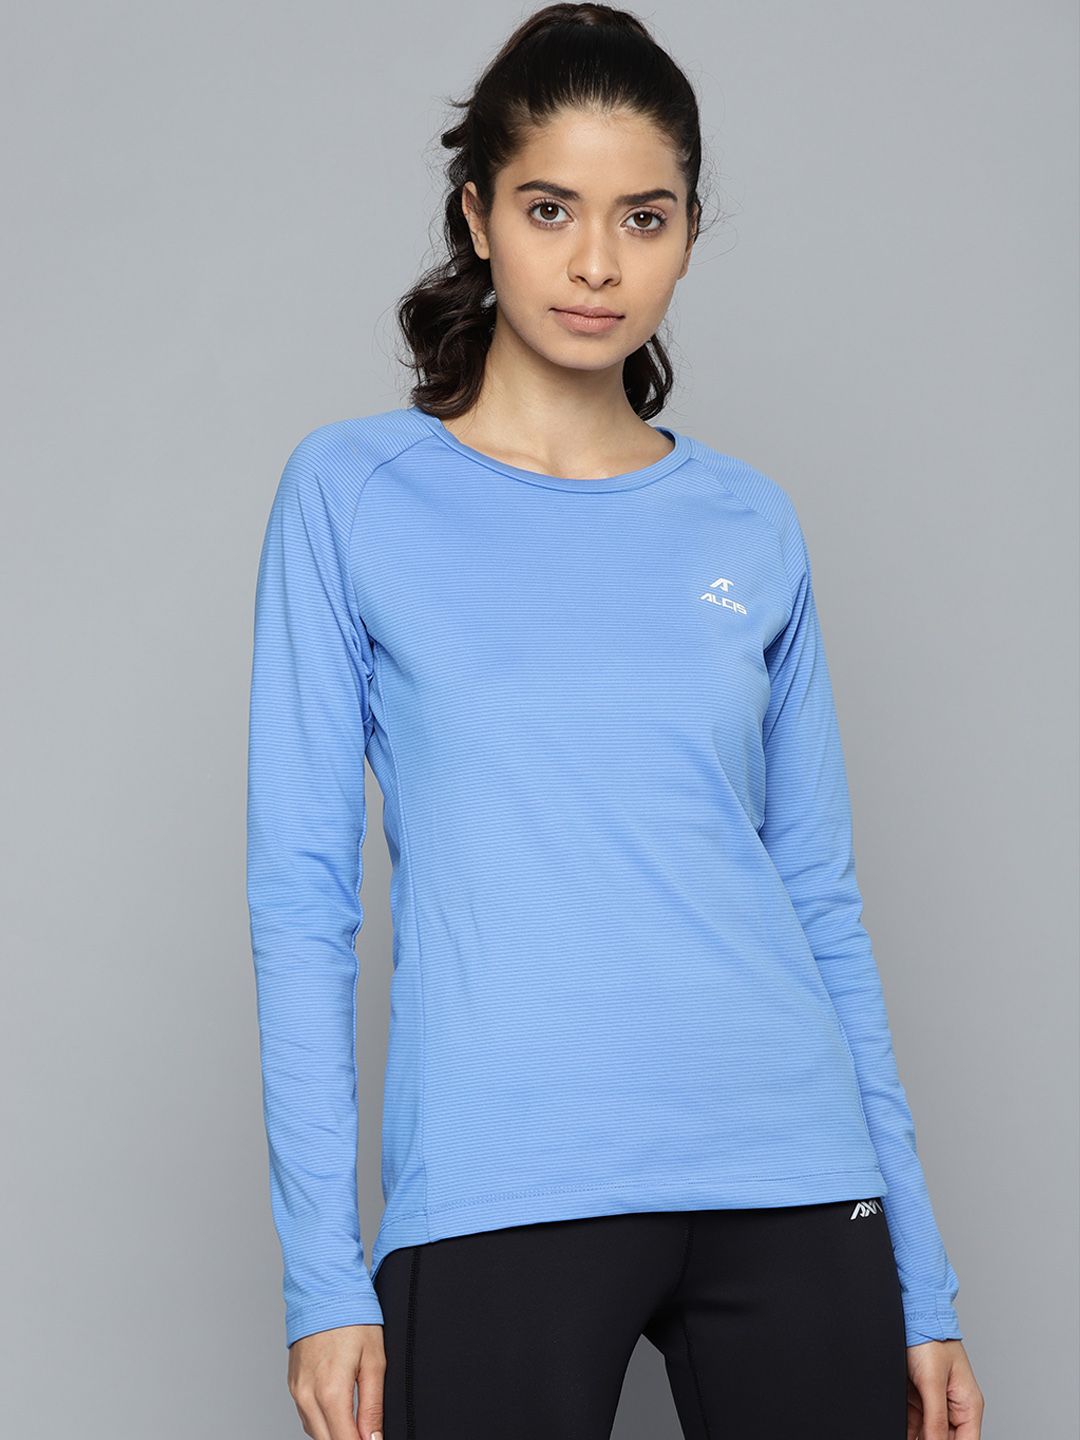 Alcis Women Blue Striped Sporty Sweatshirt Price in India